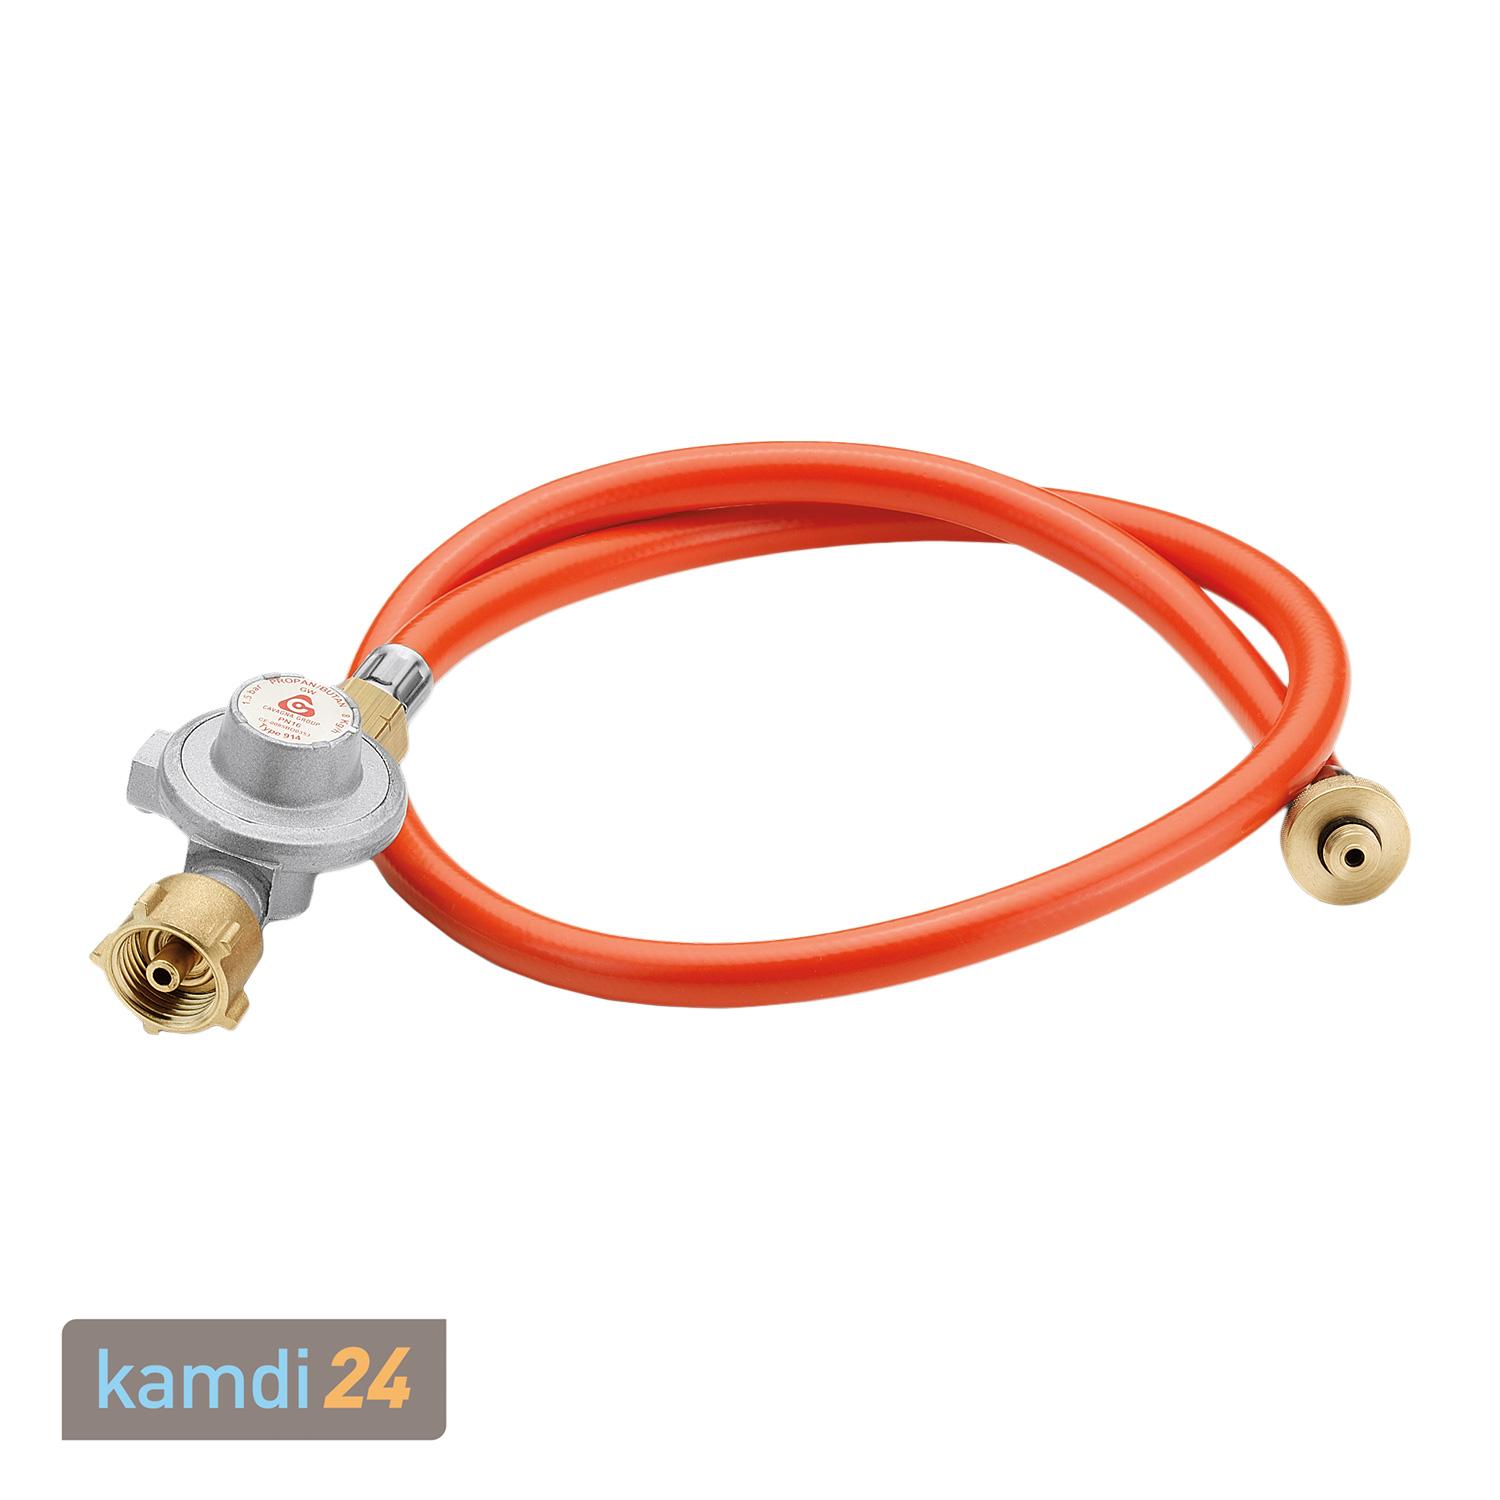 https://www.kamdi24.de/images/product_images/popup/weber-adapter-kit-fuer-gasflasche.jpg